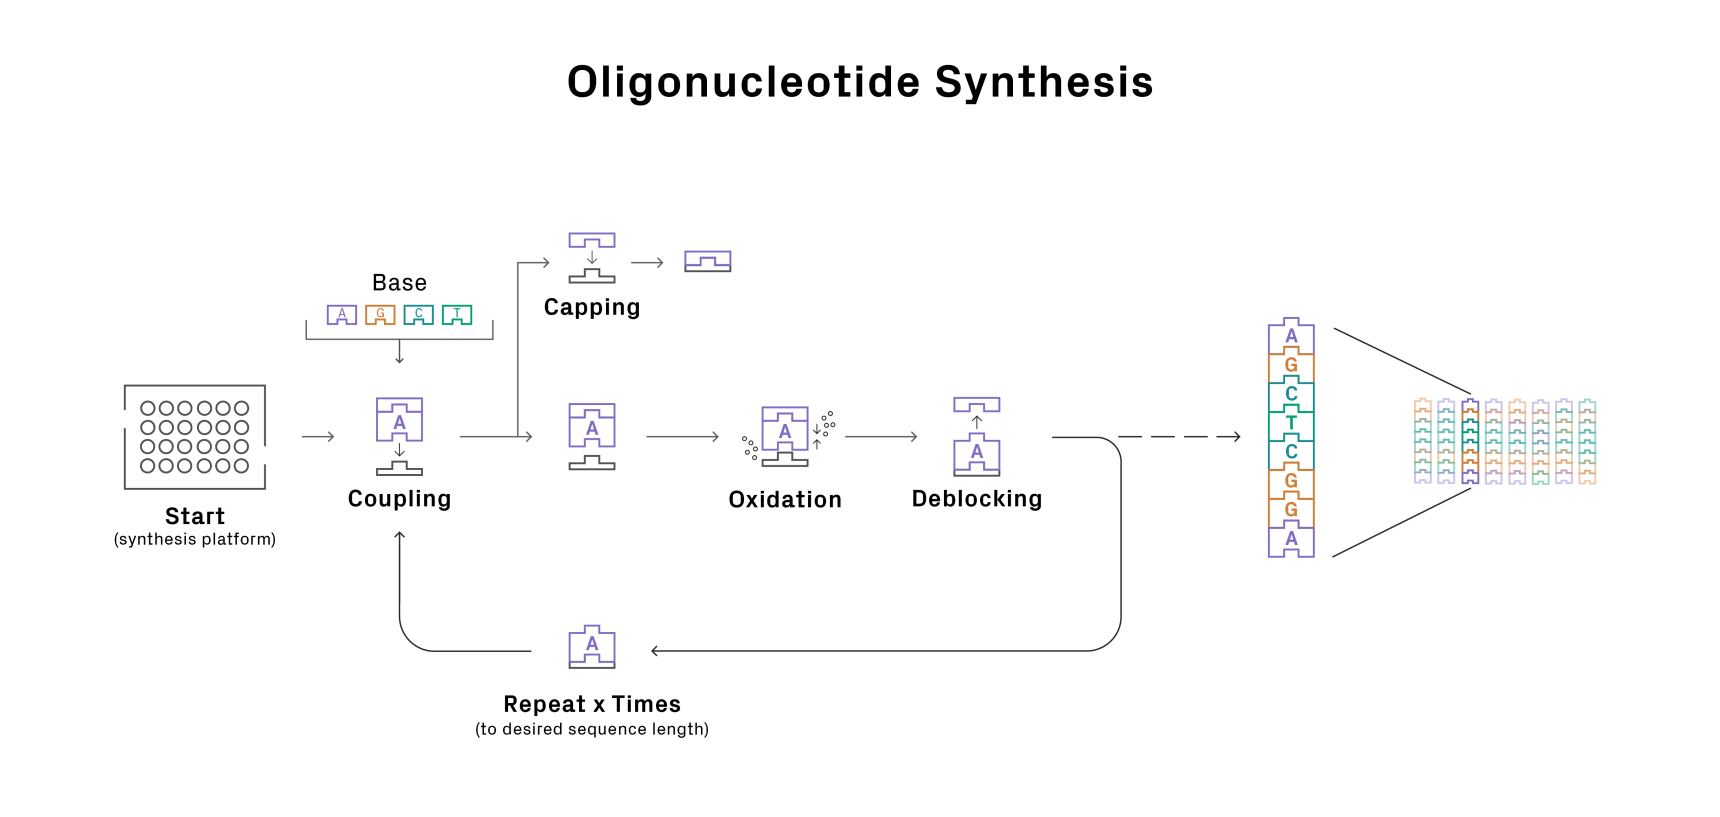 Oligonucleotide synthesis cycle